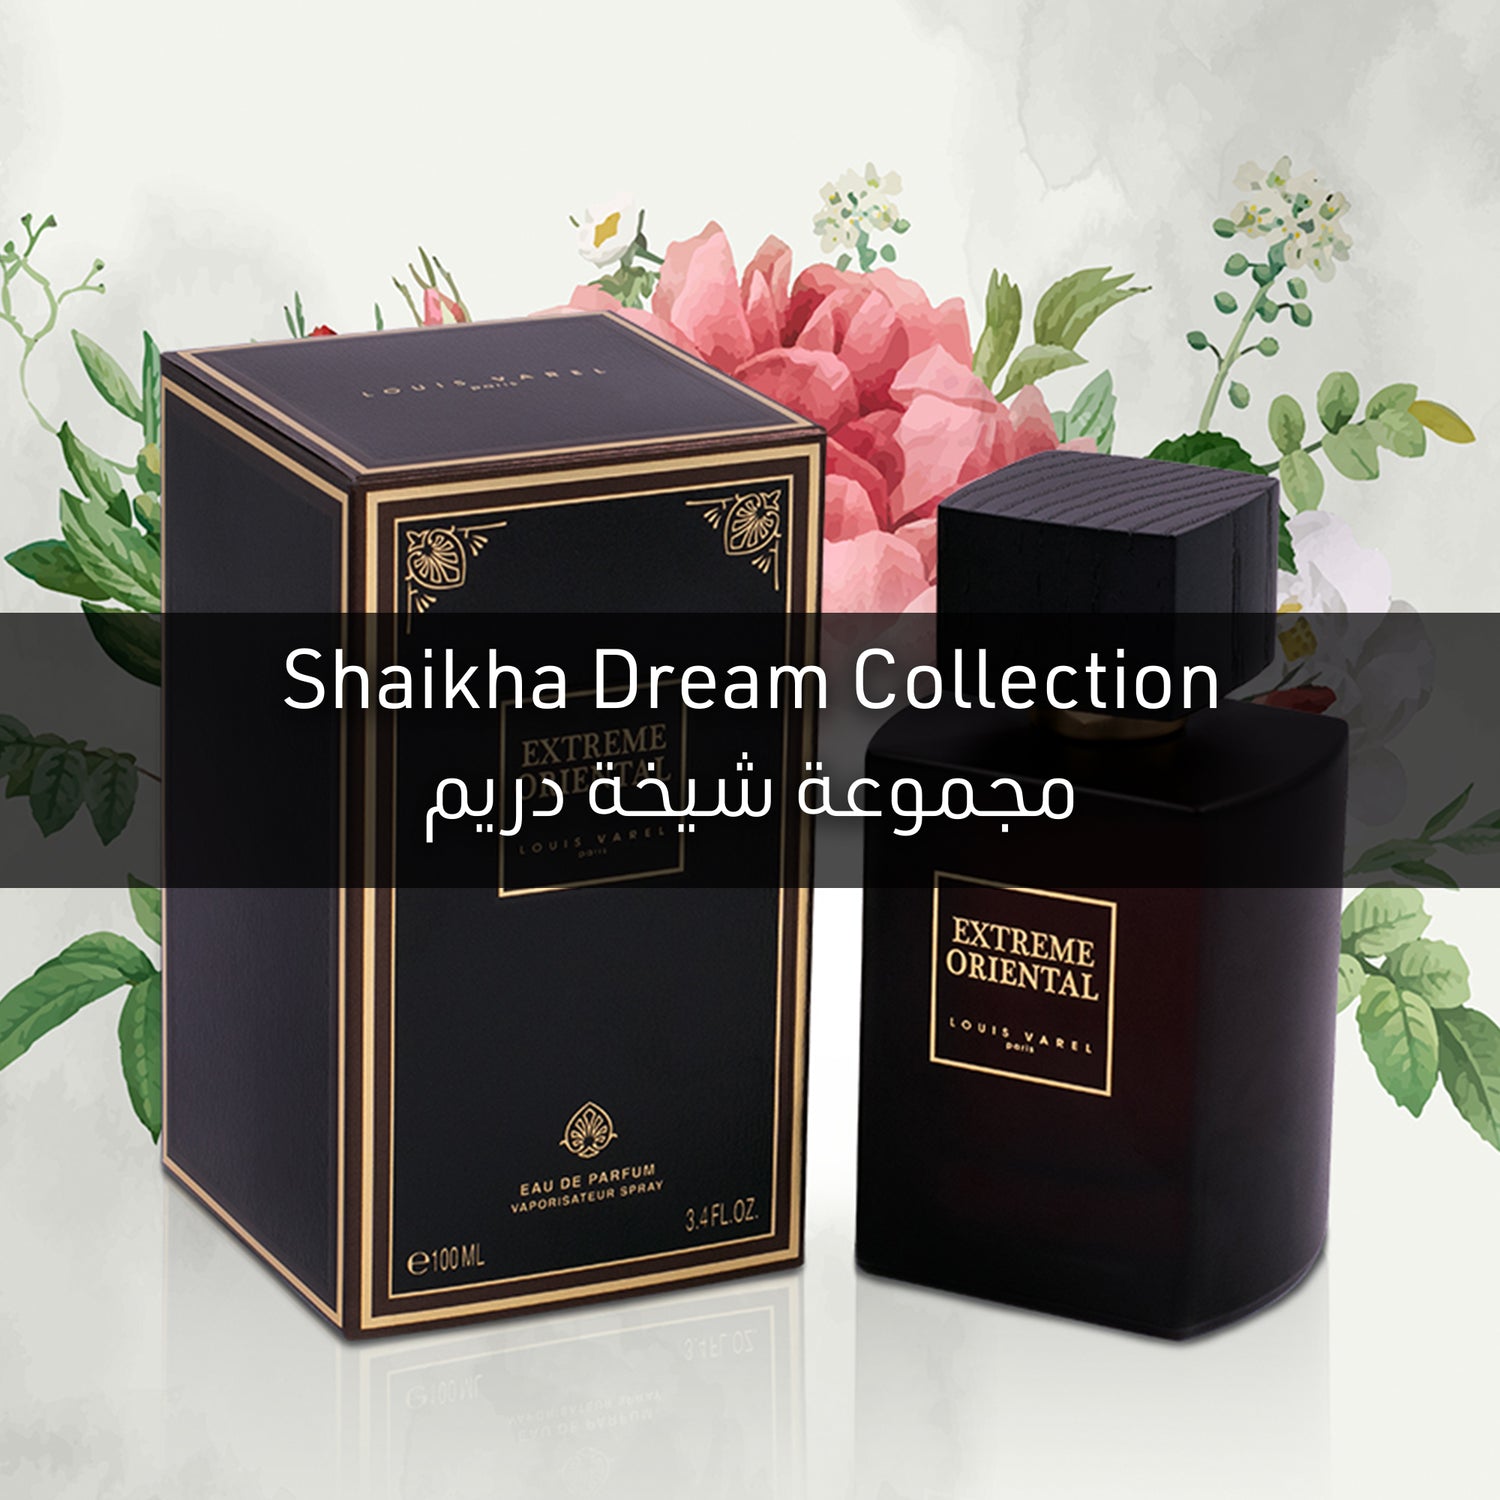 Shaikha Dream Collection